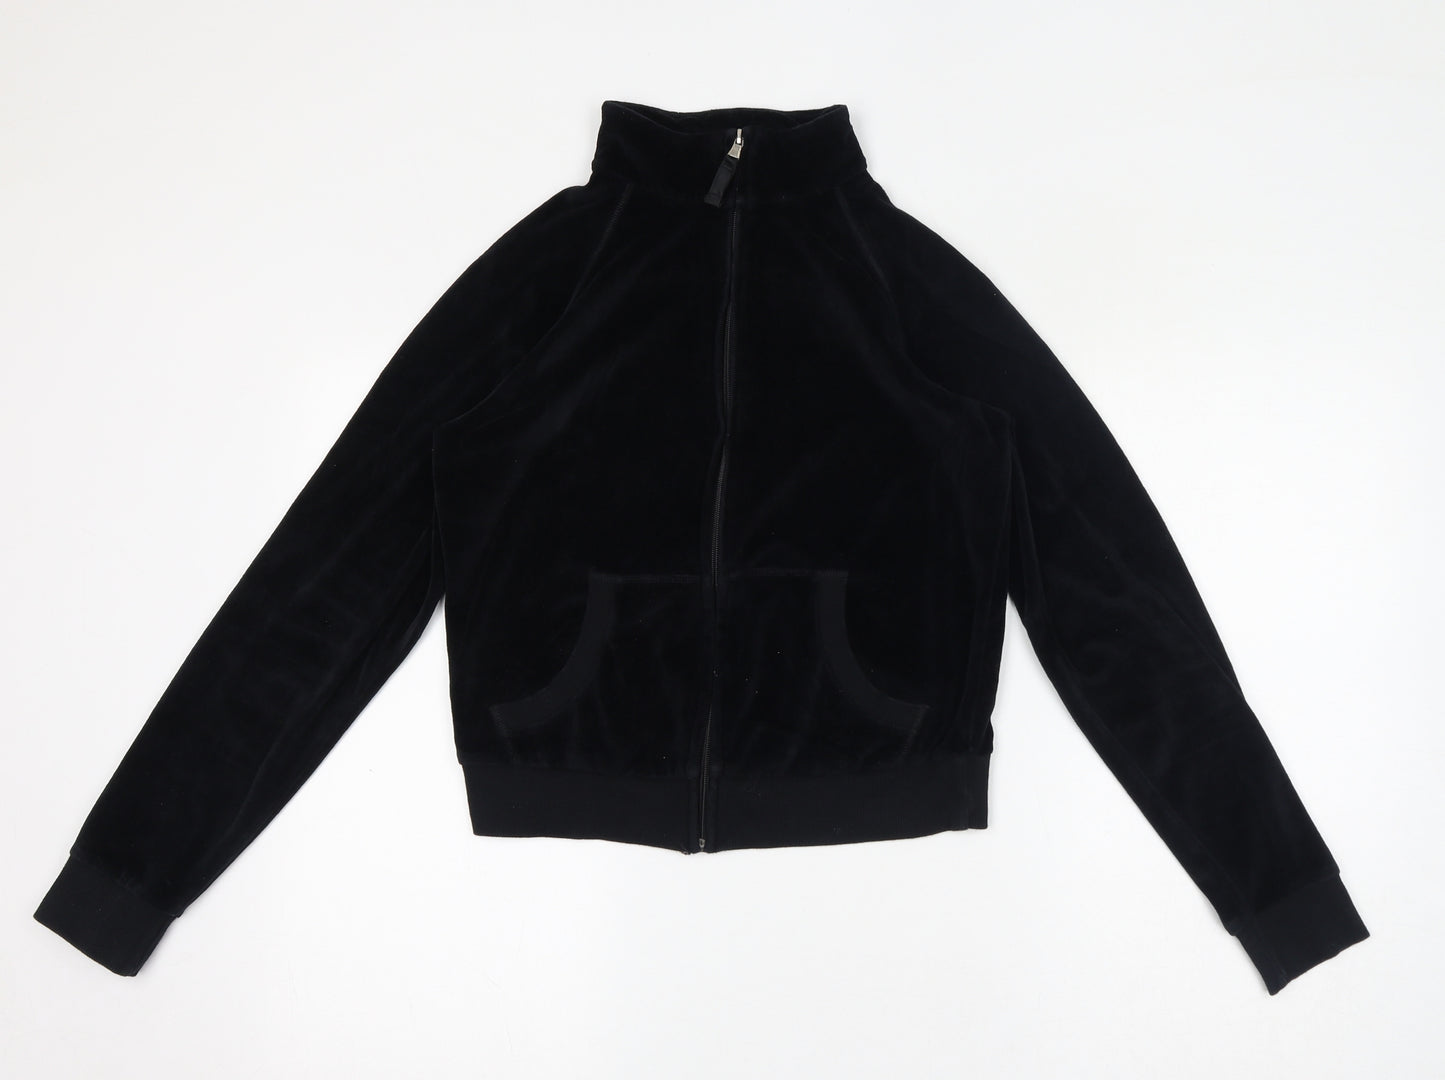 Marks and Spencer Womens Black Cotton Full Zip Sweatshirt Size 12 Zip - High Neck Pockets